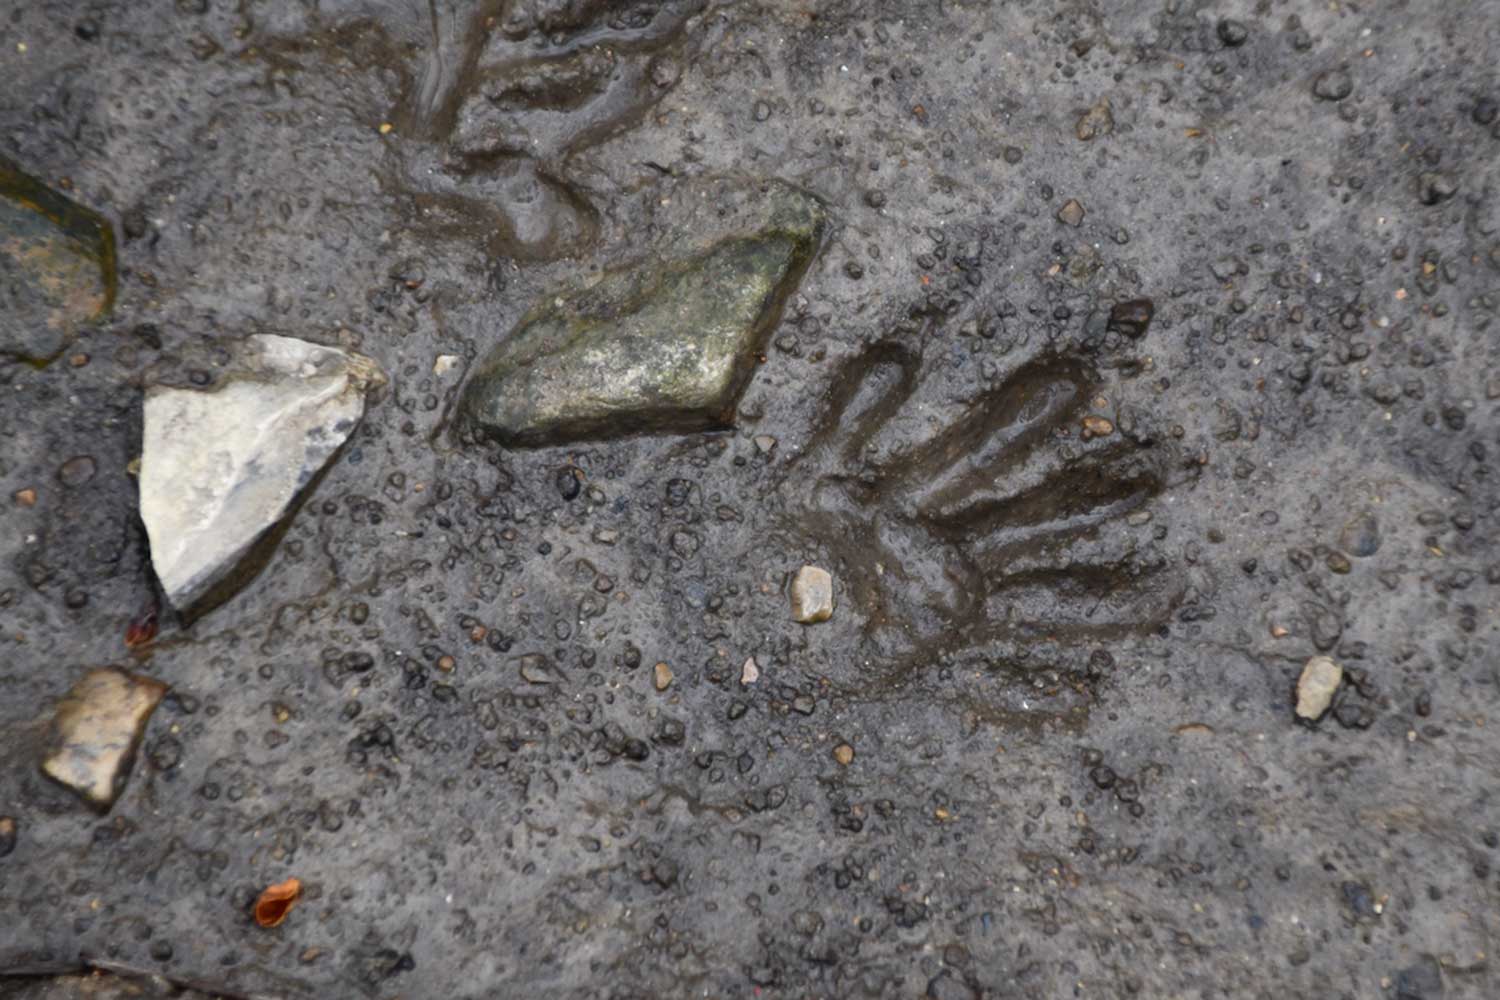 A raccoon paw print in wet mud.